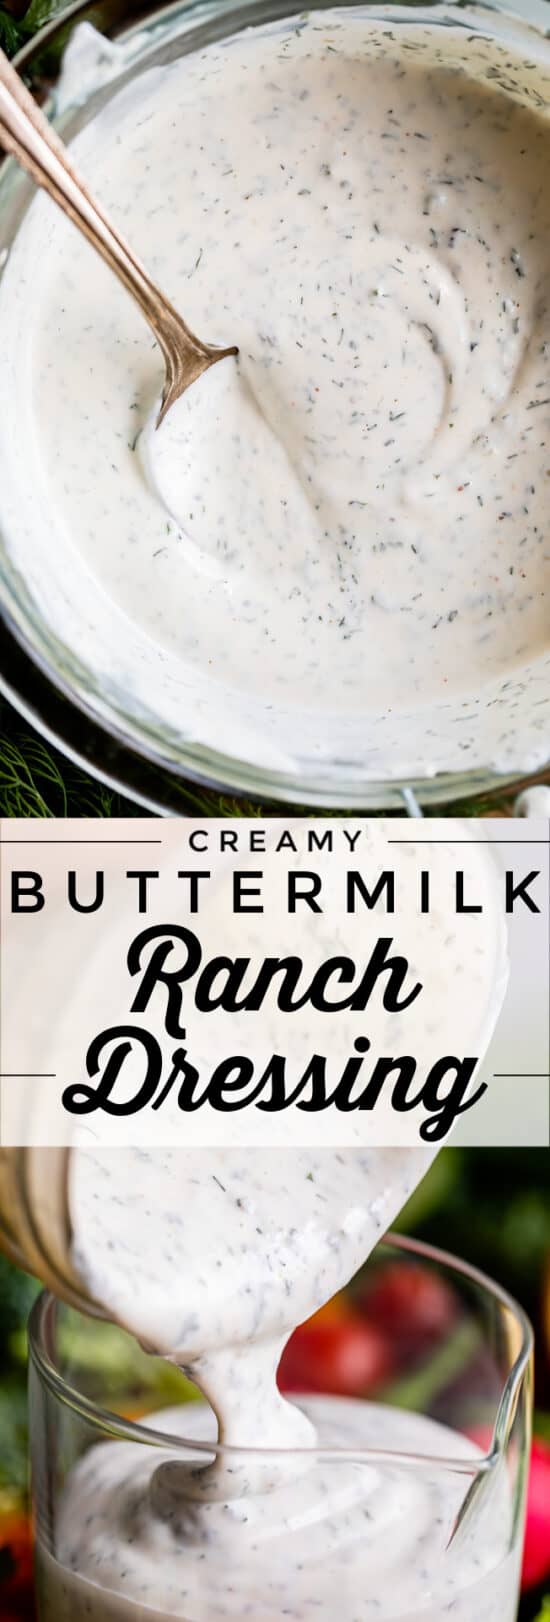 buttermilk ranch dressing recipe overhead